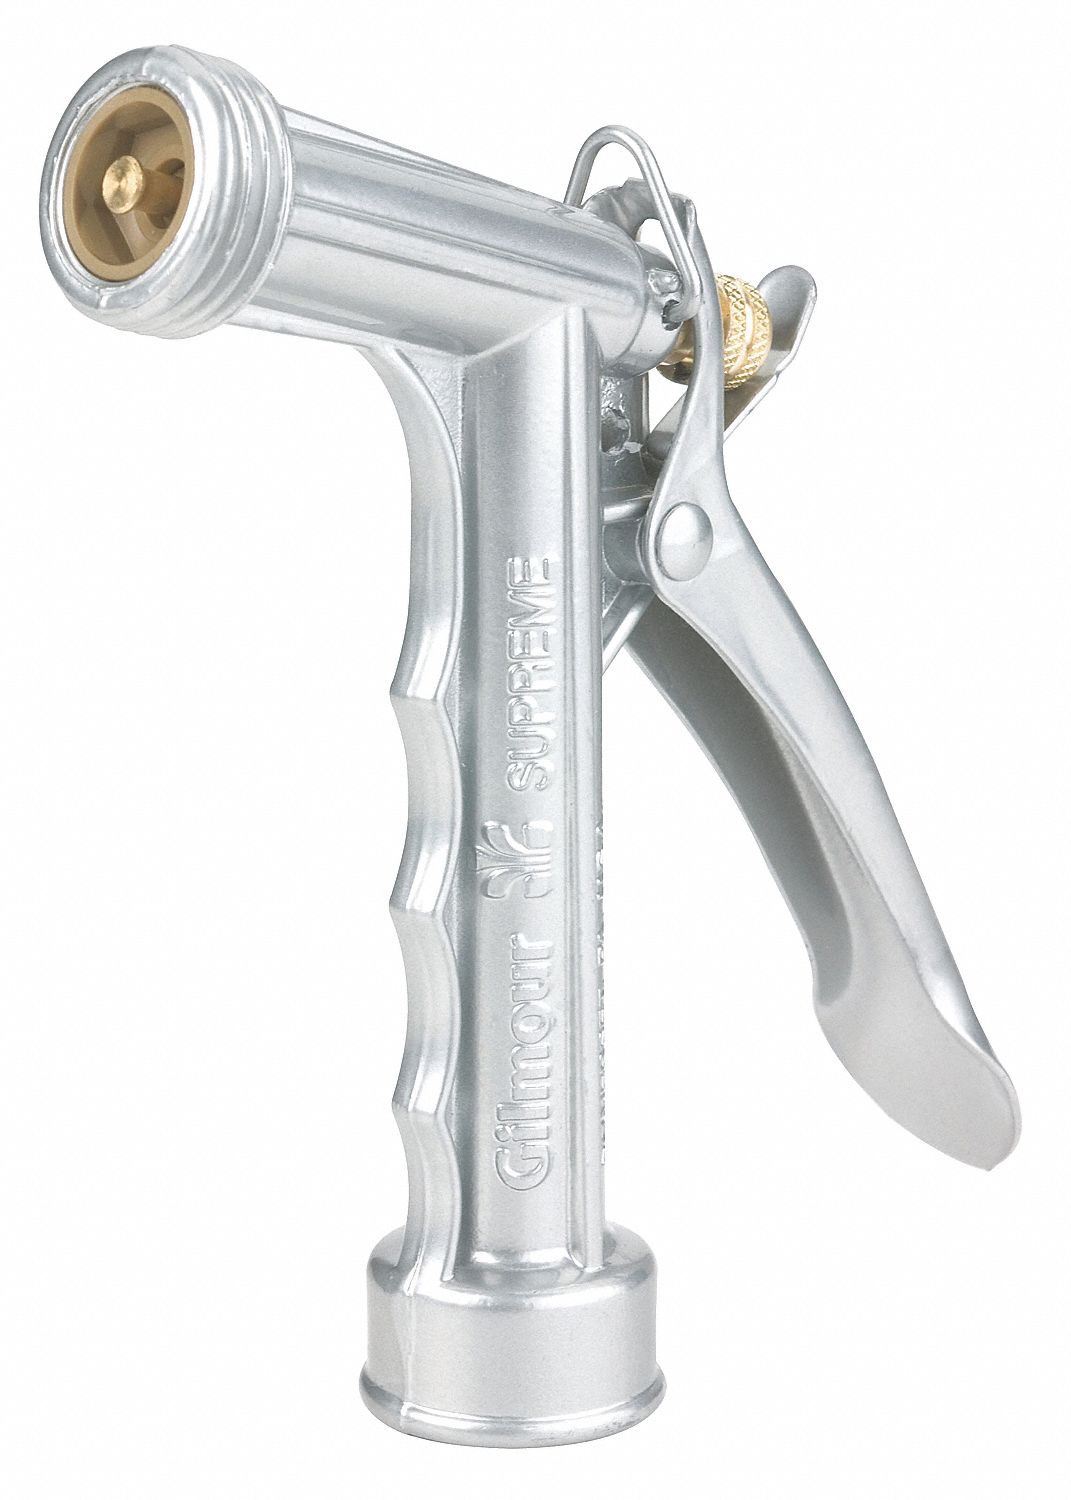 Water Nozzle: 60 psi Max. Pressure, Trigger, GHT, Brass Stem/Steel Exterior, Metal